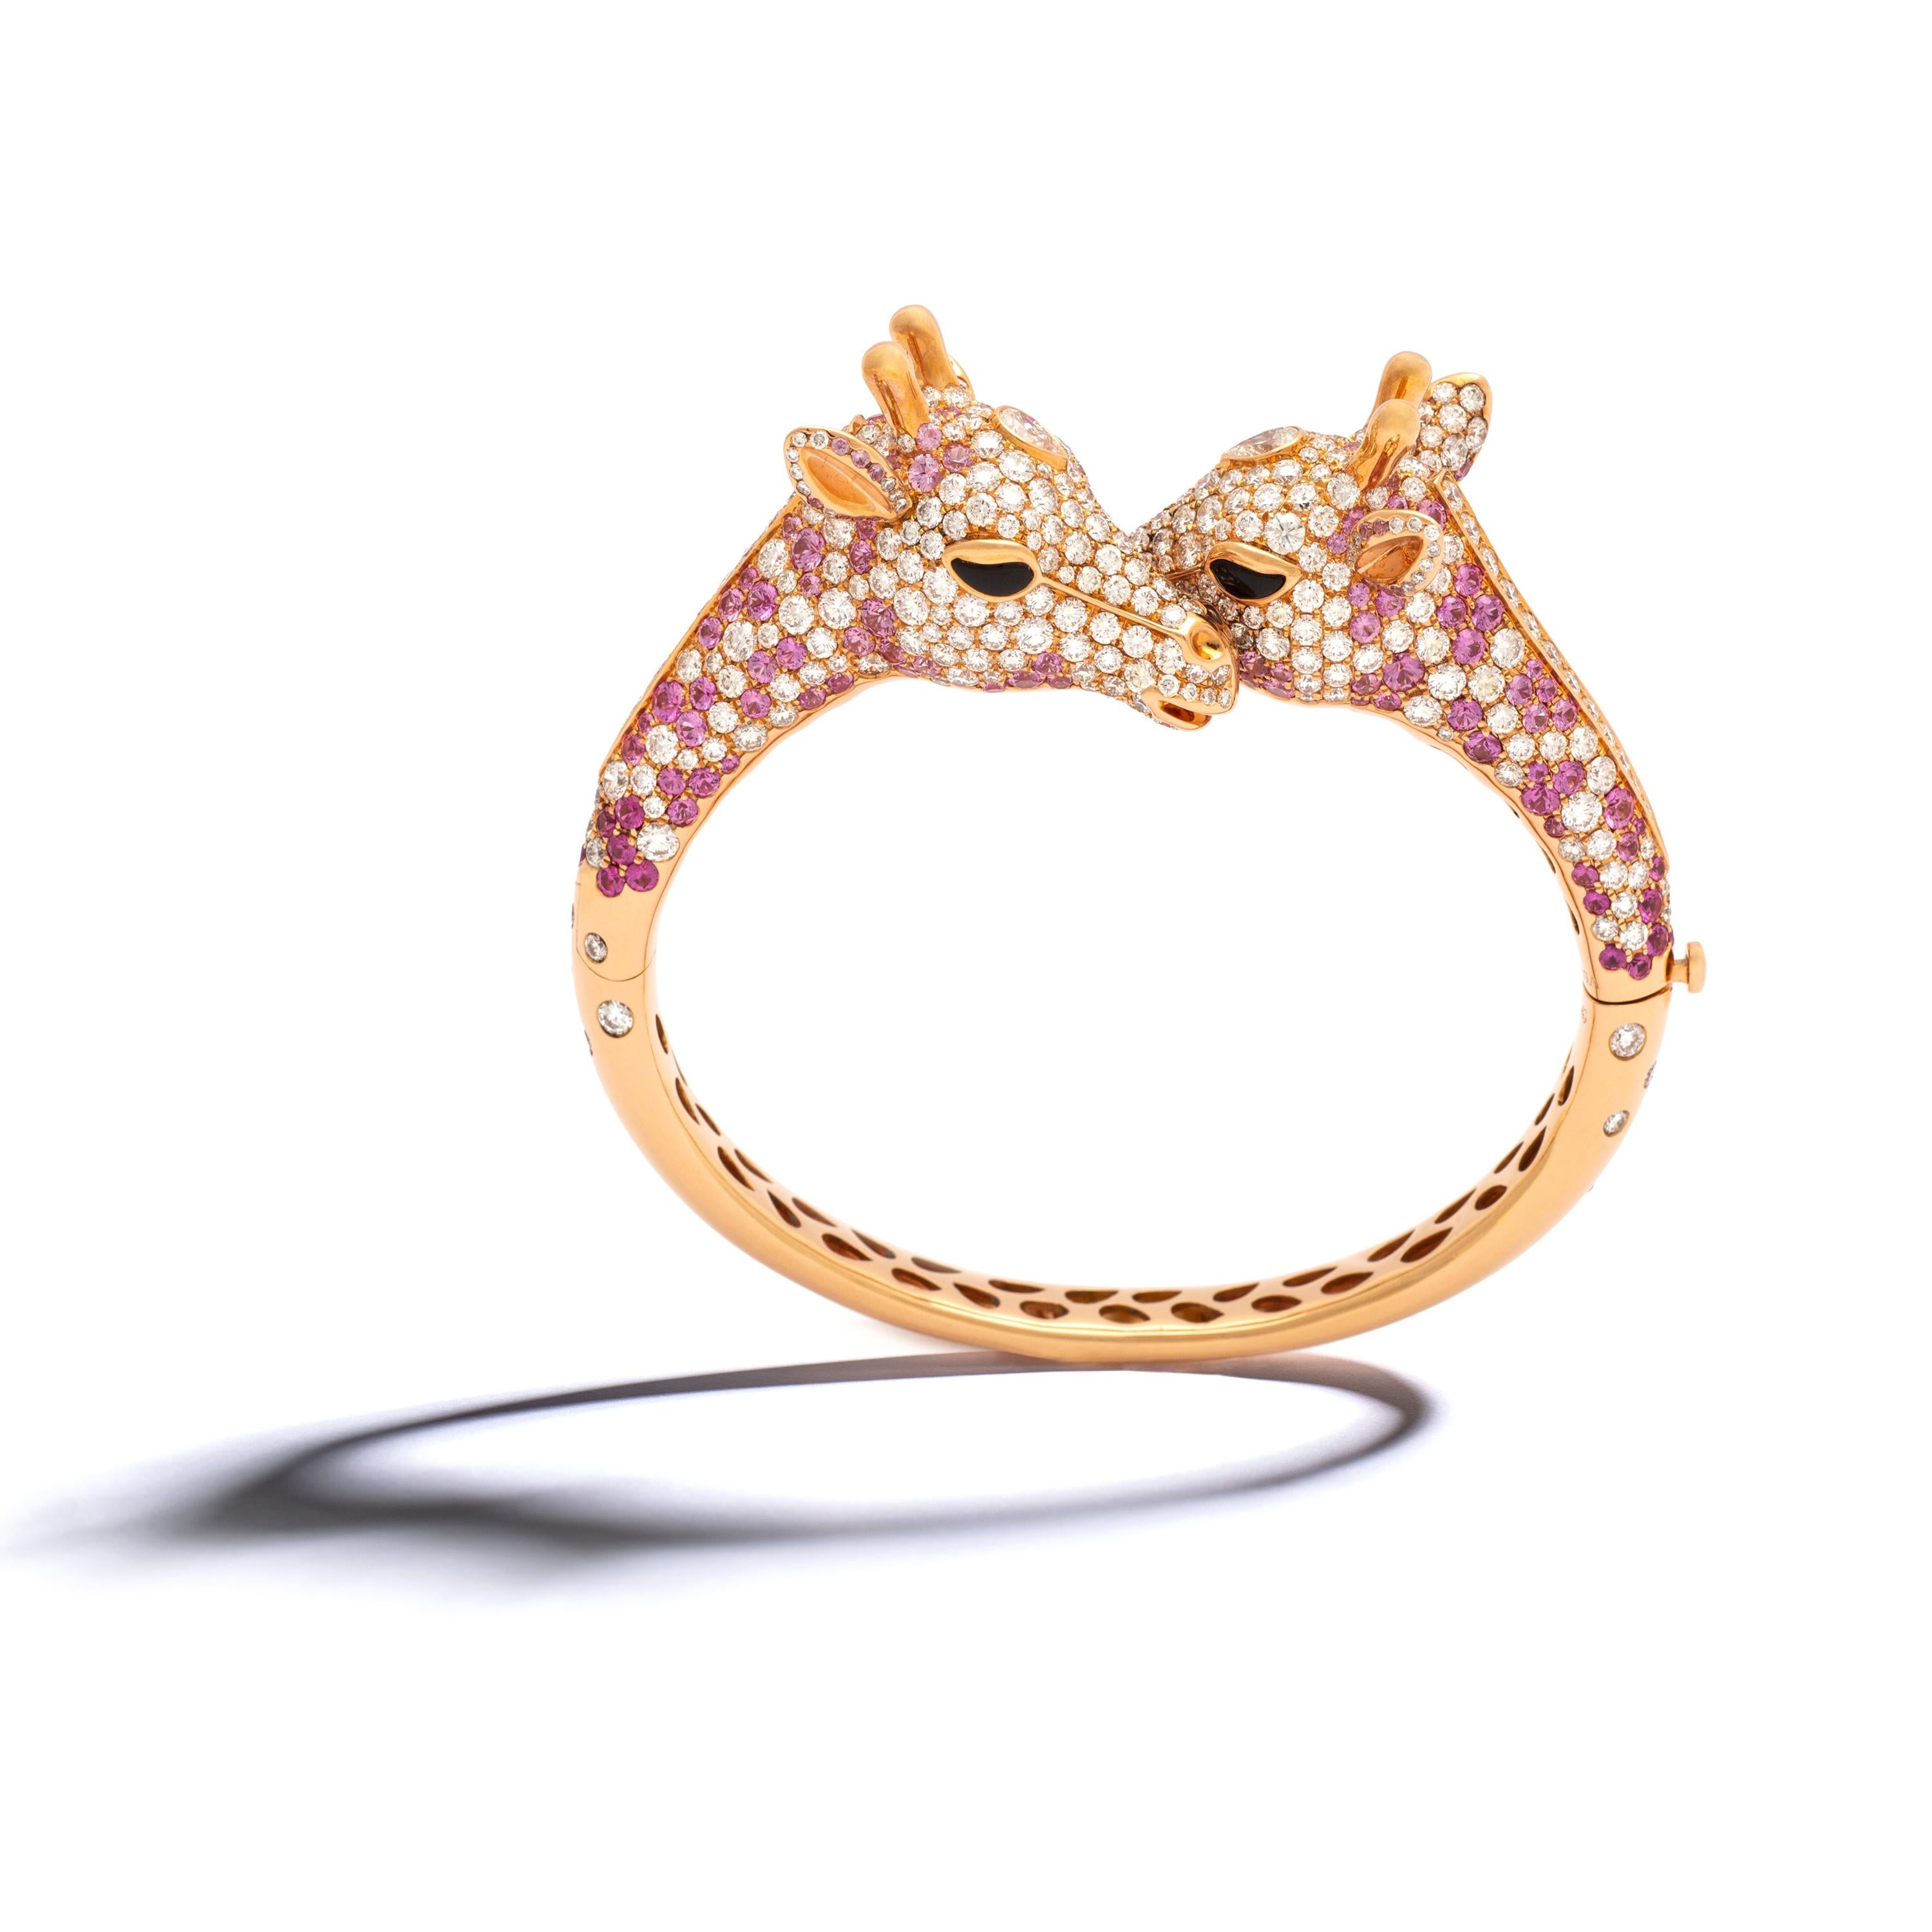 Armband Giraffe Rotgold 555 Diamanten 16,80 Karat 217 rosa Saphire 8,20 Karat 2 schwarze Diamanten 0,49 Karat 4 Onyx 0,43 Karat.